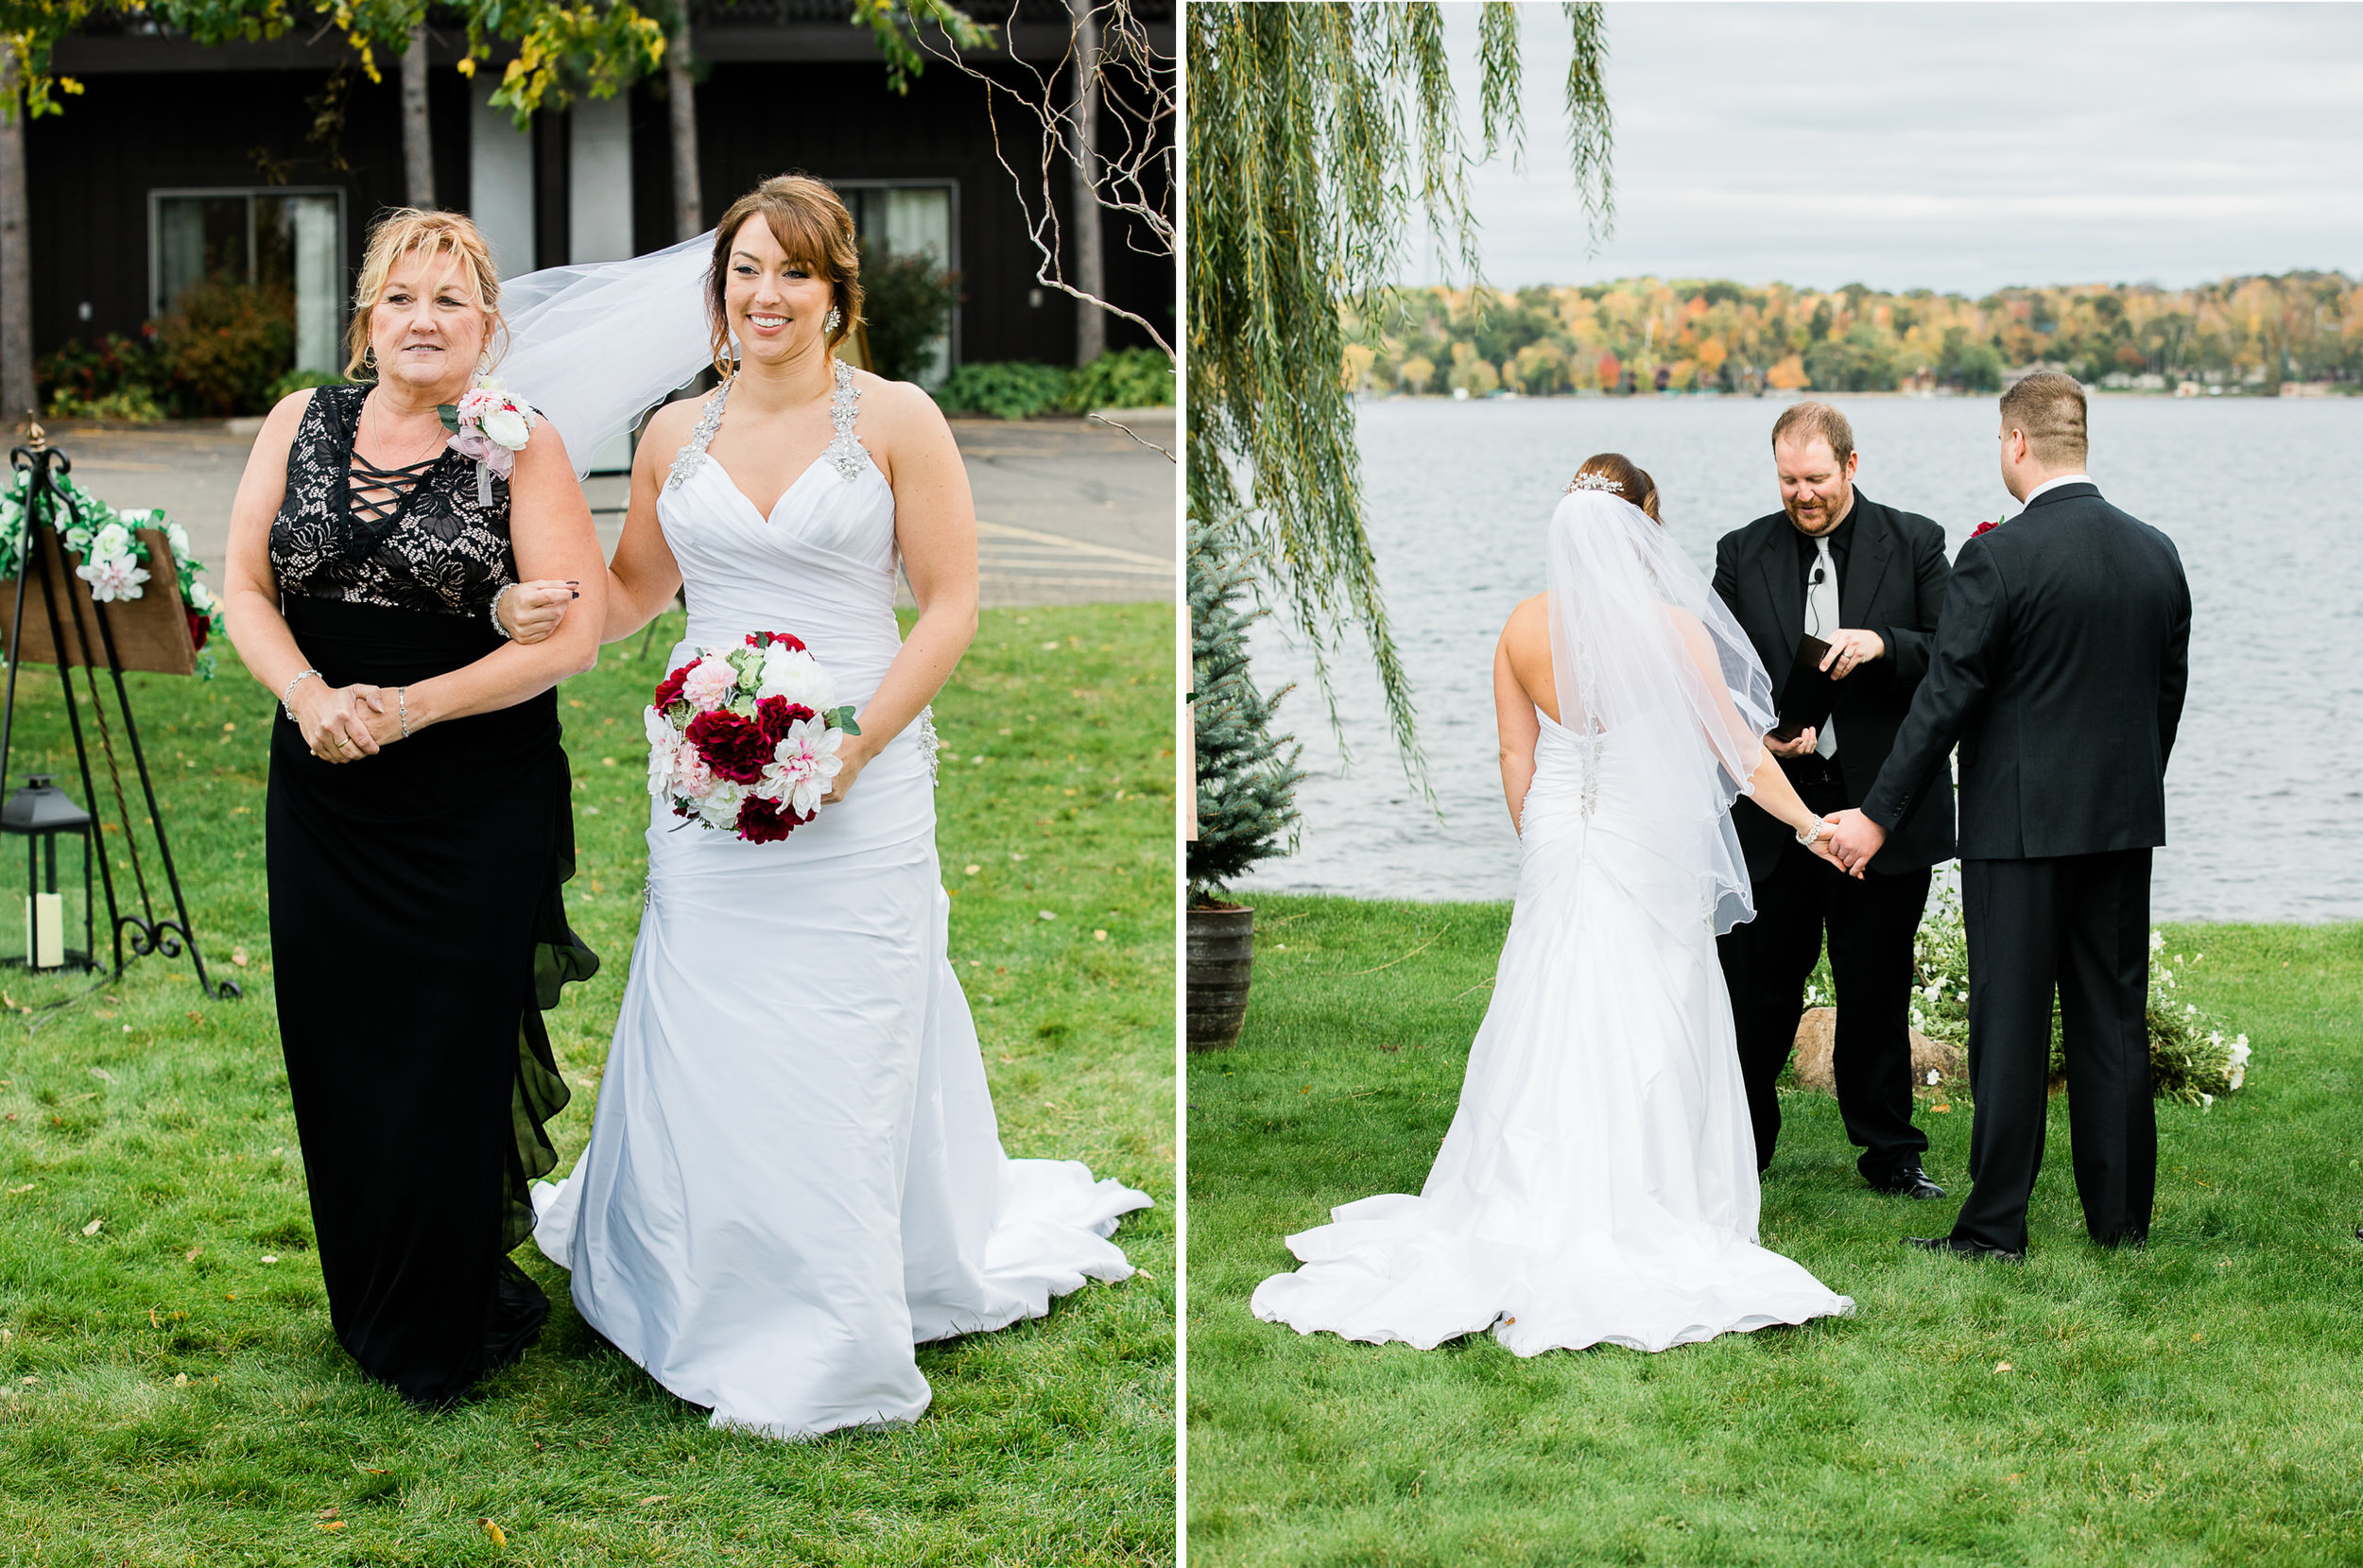 Cragun's Resort Fall Wedding on Gull Lake in Brainerd MN